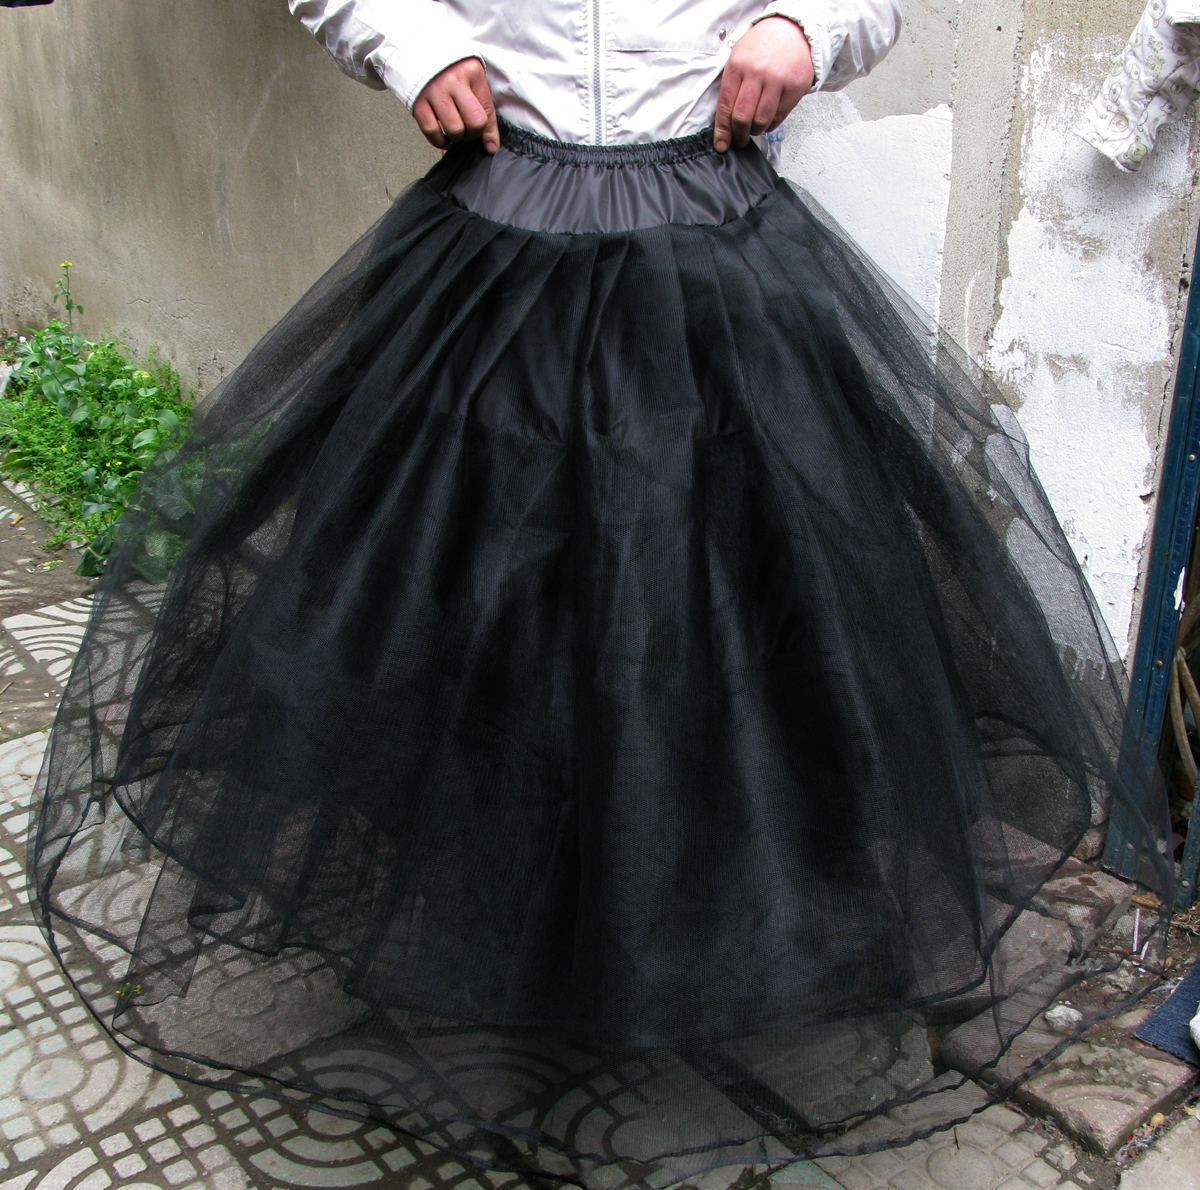 Black wedding panniers boneless hard sand pannier boneless skirt stretcher big panniers hard sand skirt wg04